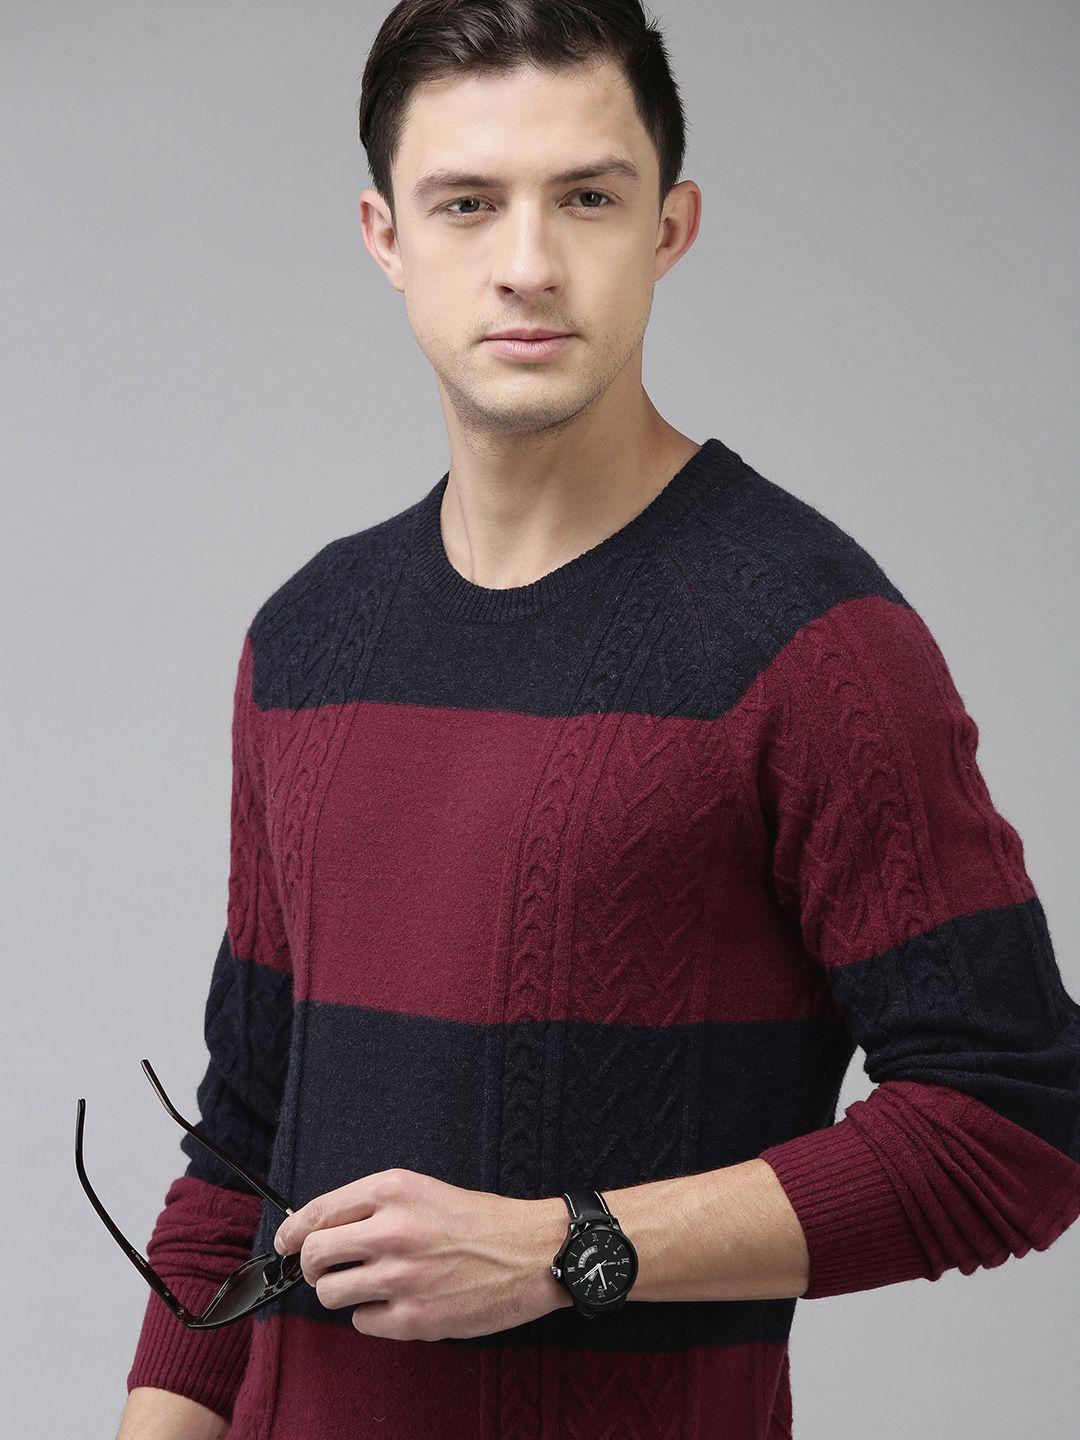 u-s-polo-assn-men-navy-blue-&-maroon-colourblocked-pullover-sweater